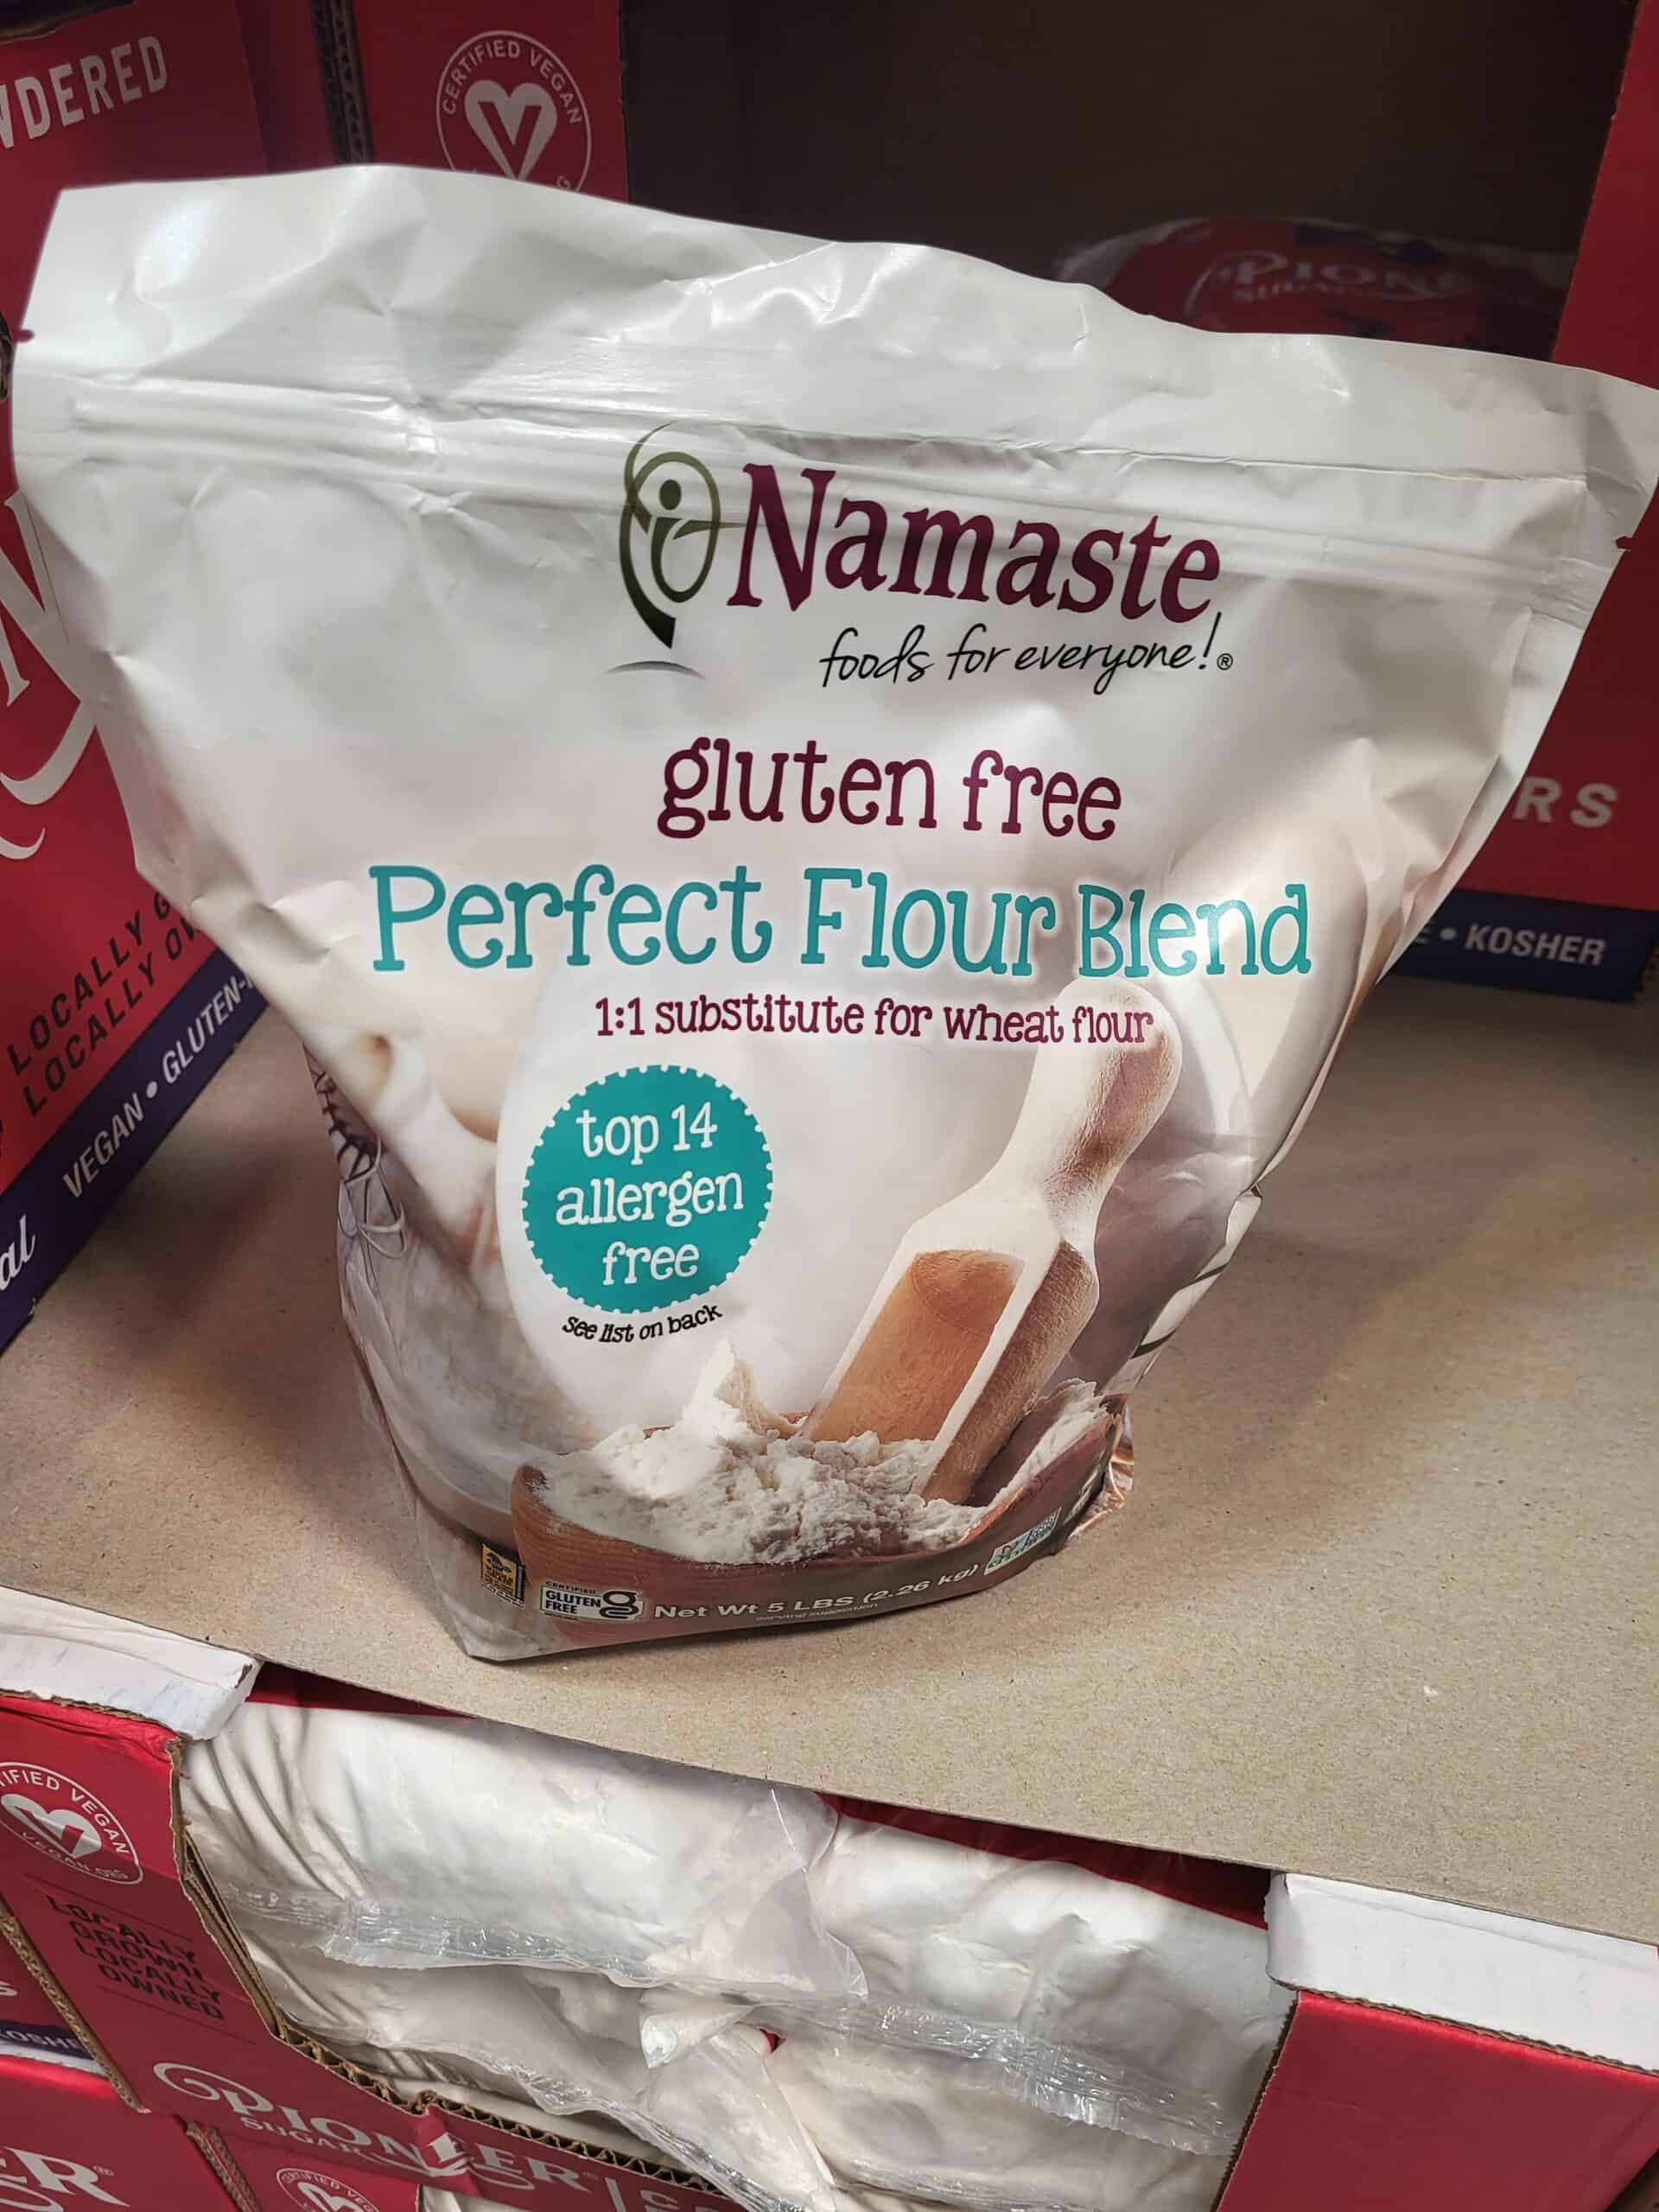 A bag of Namaste gluten-free flour on the shelf at Costco.